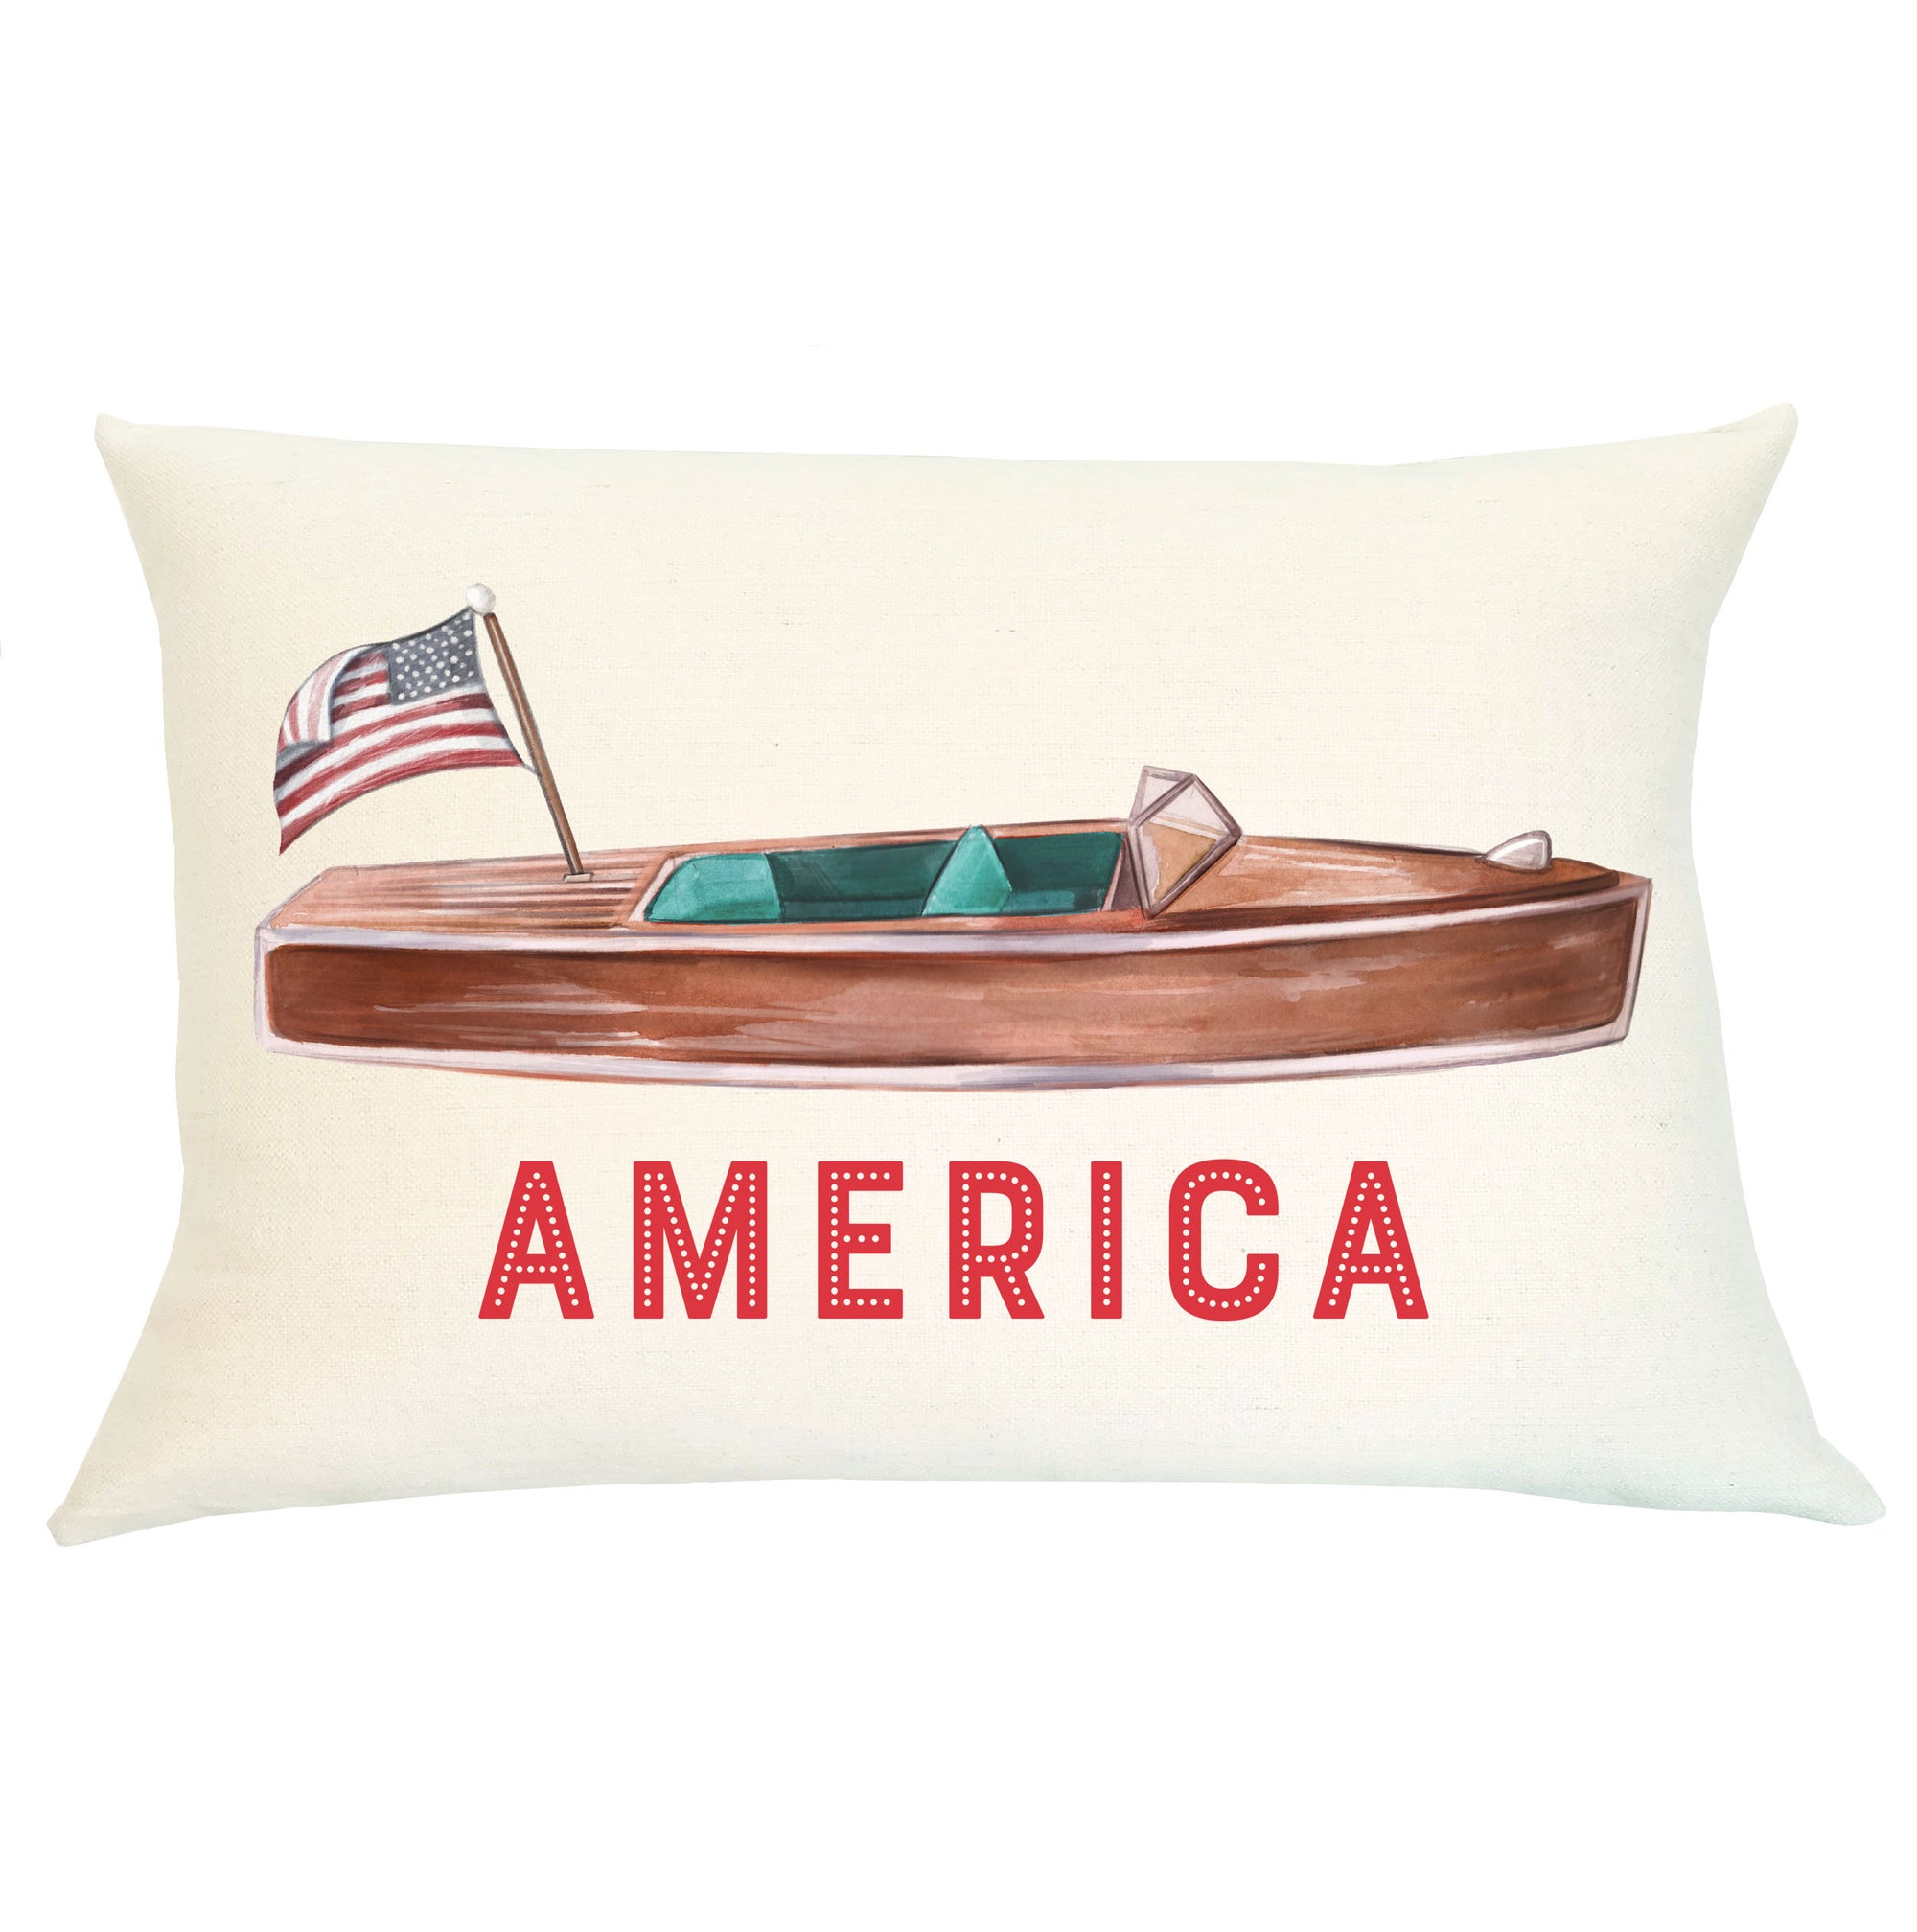 Pillow Lumbar - Woody Boat "America" - Insert Included